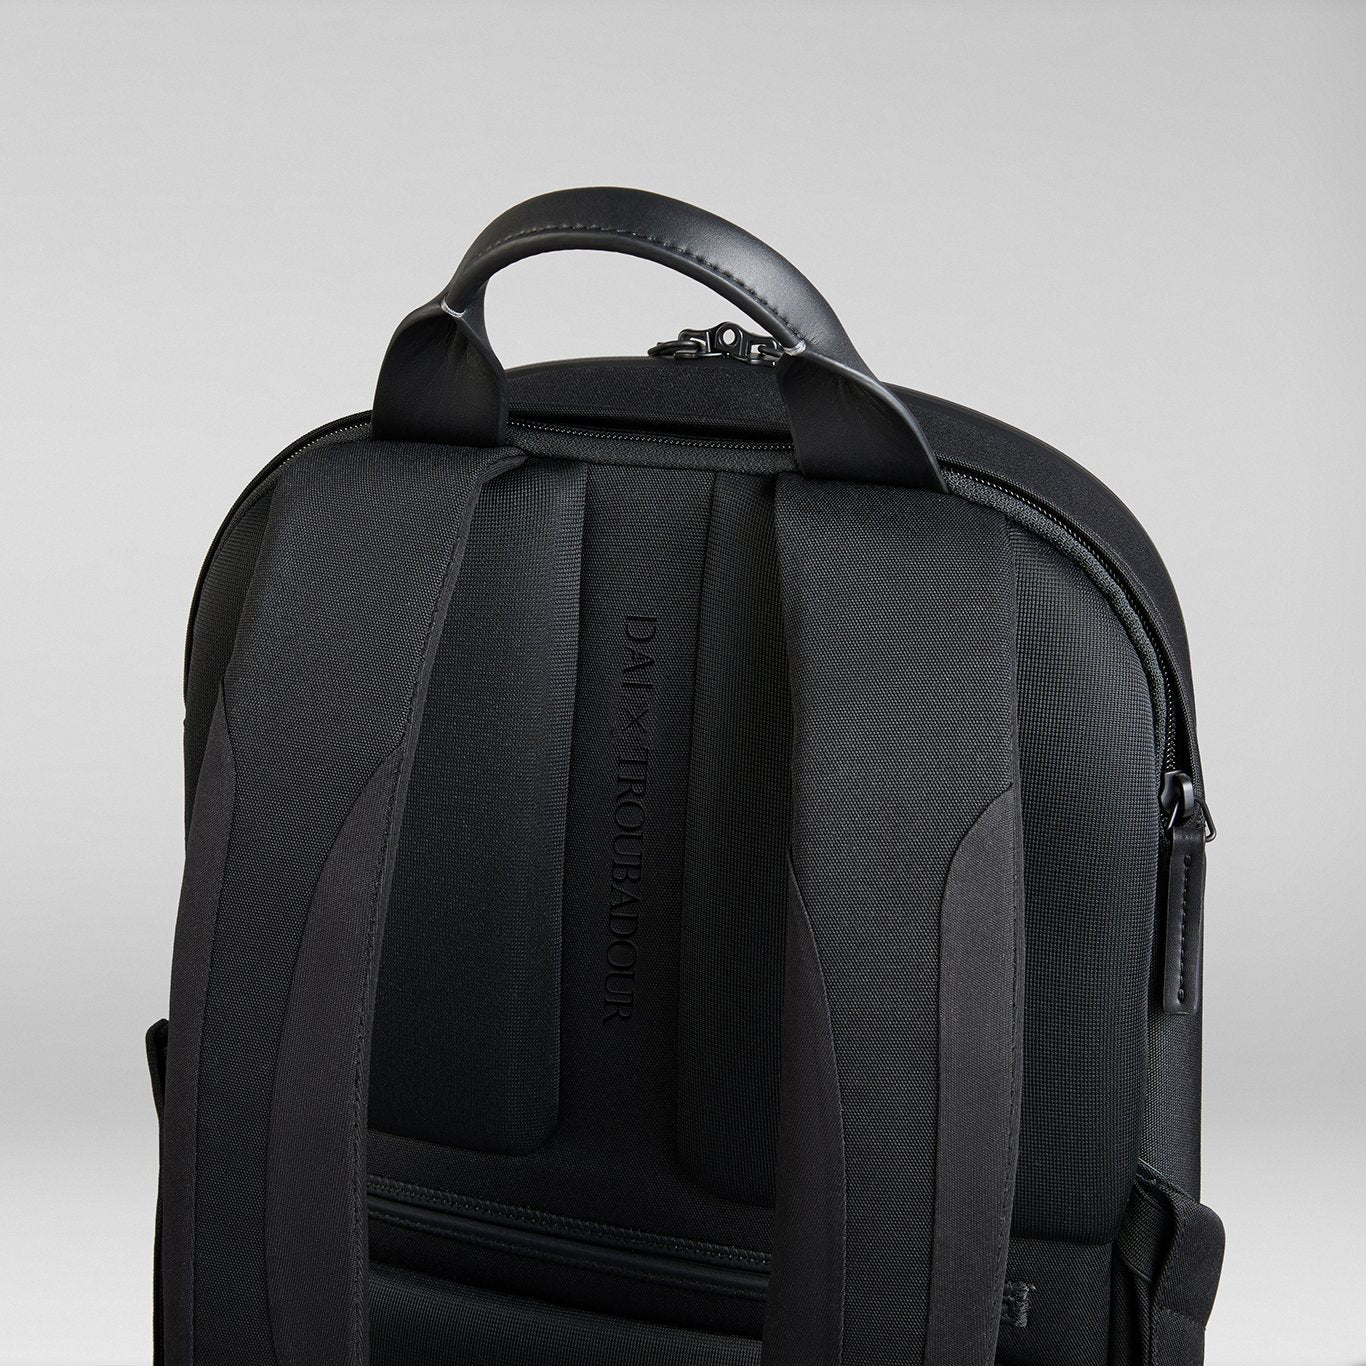 DAI x Troubadour Apex Compact Backpack Black